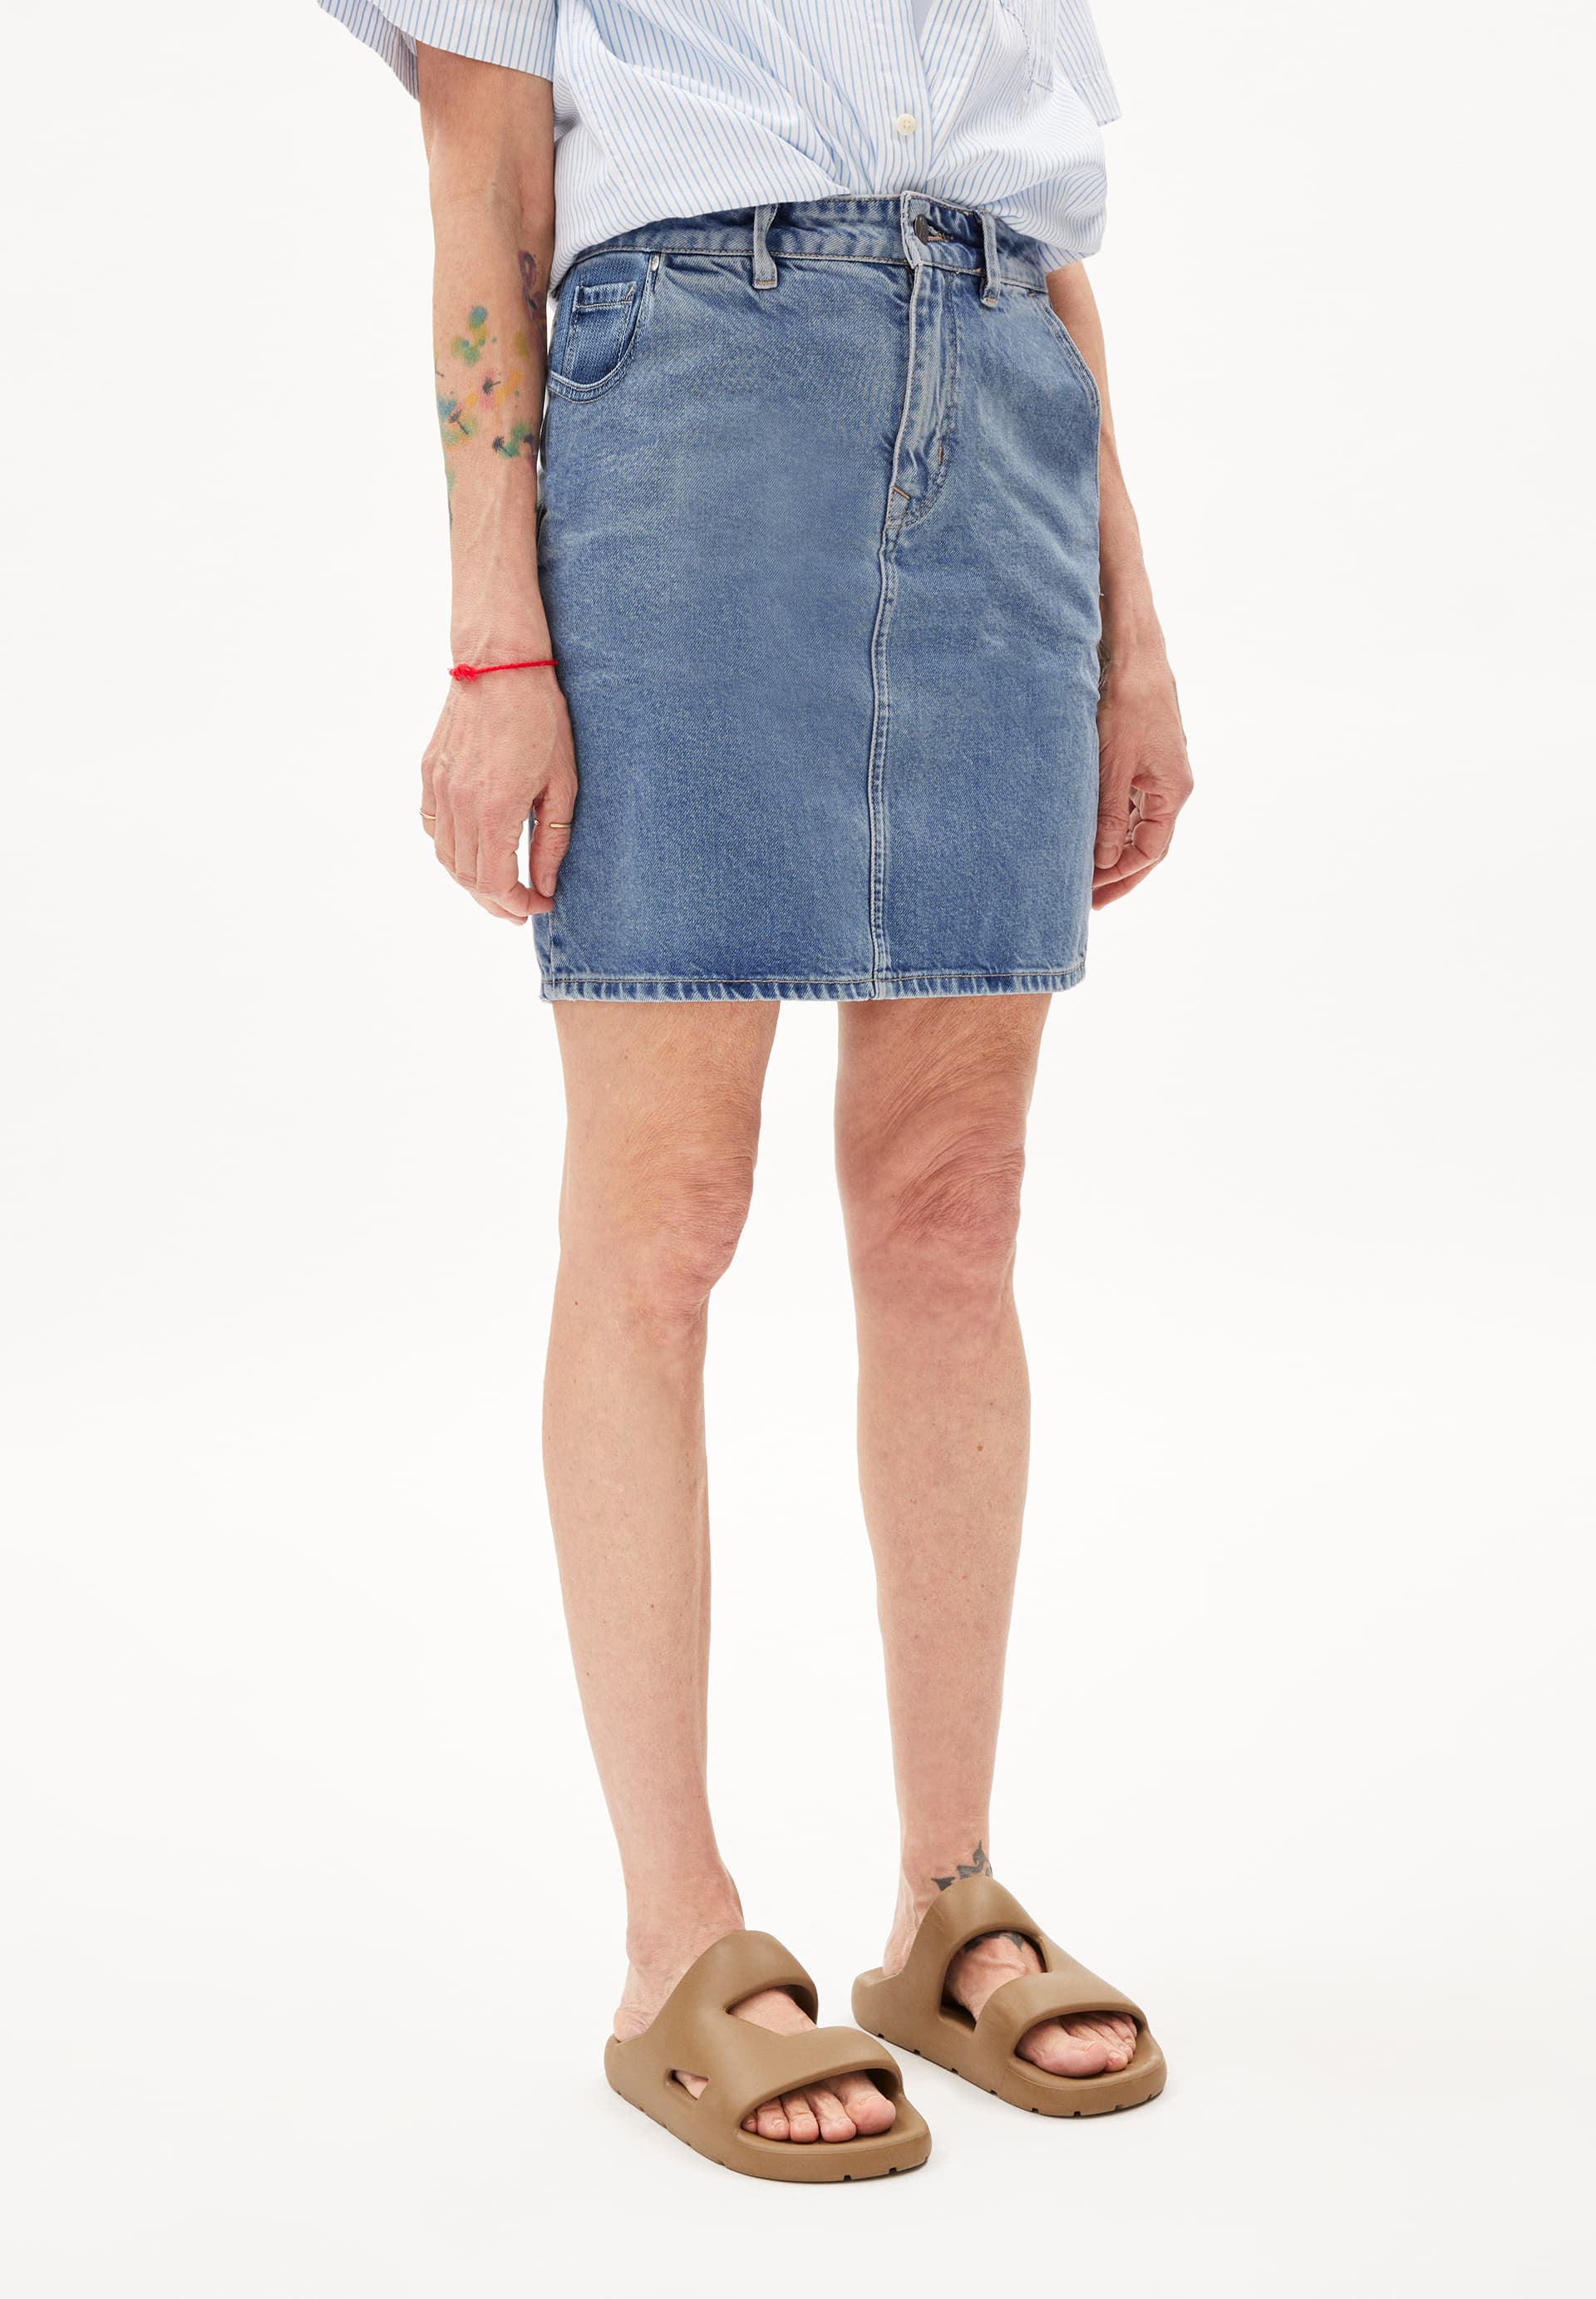 AAVA Denim Skirt Slim Fit made of Organic Cotton Mix